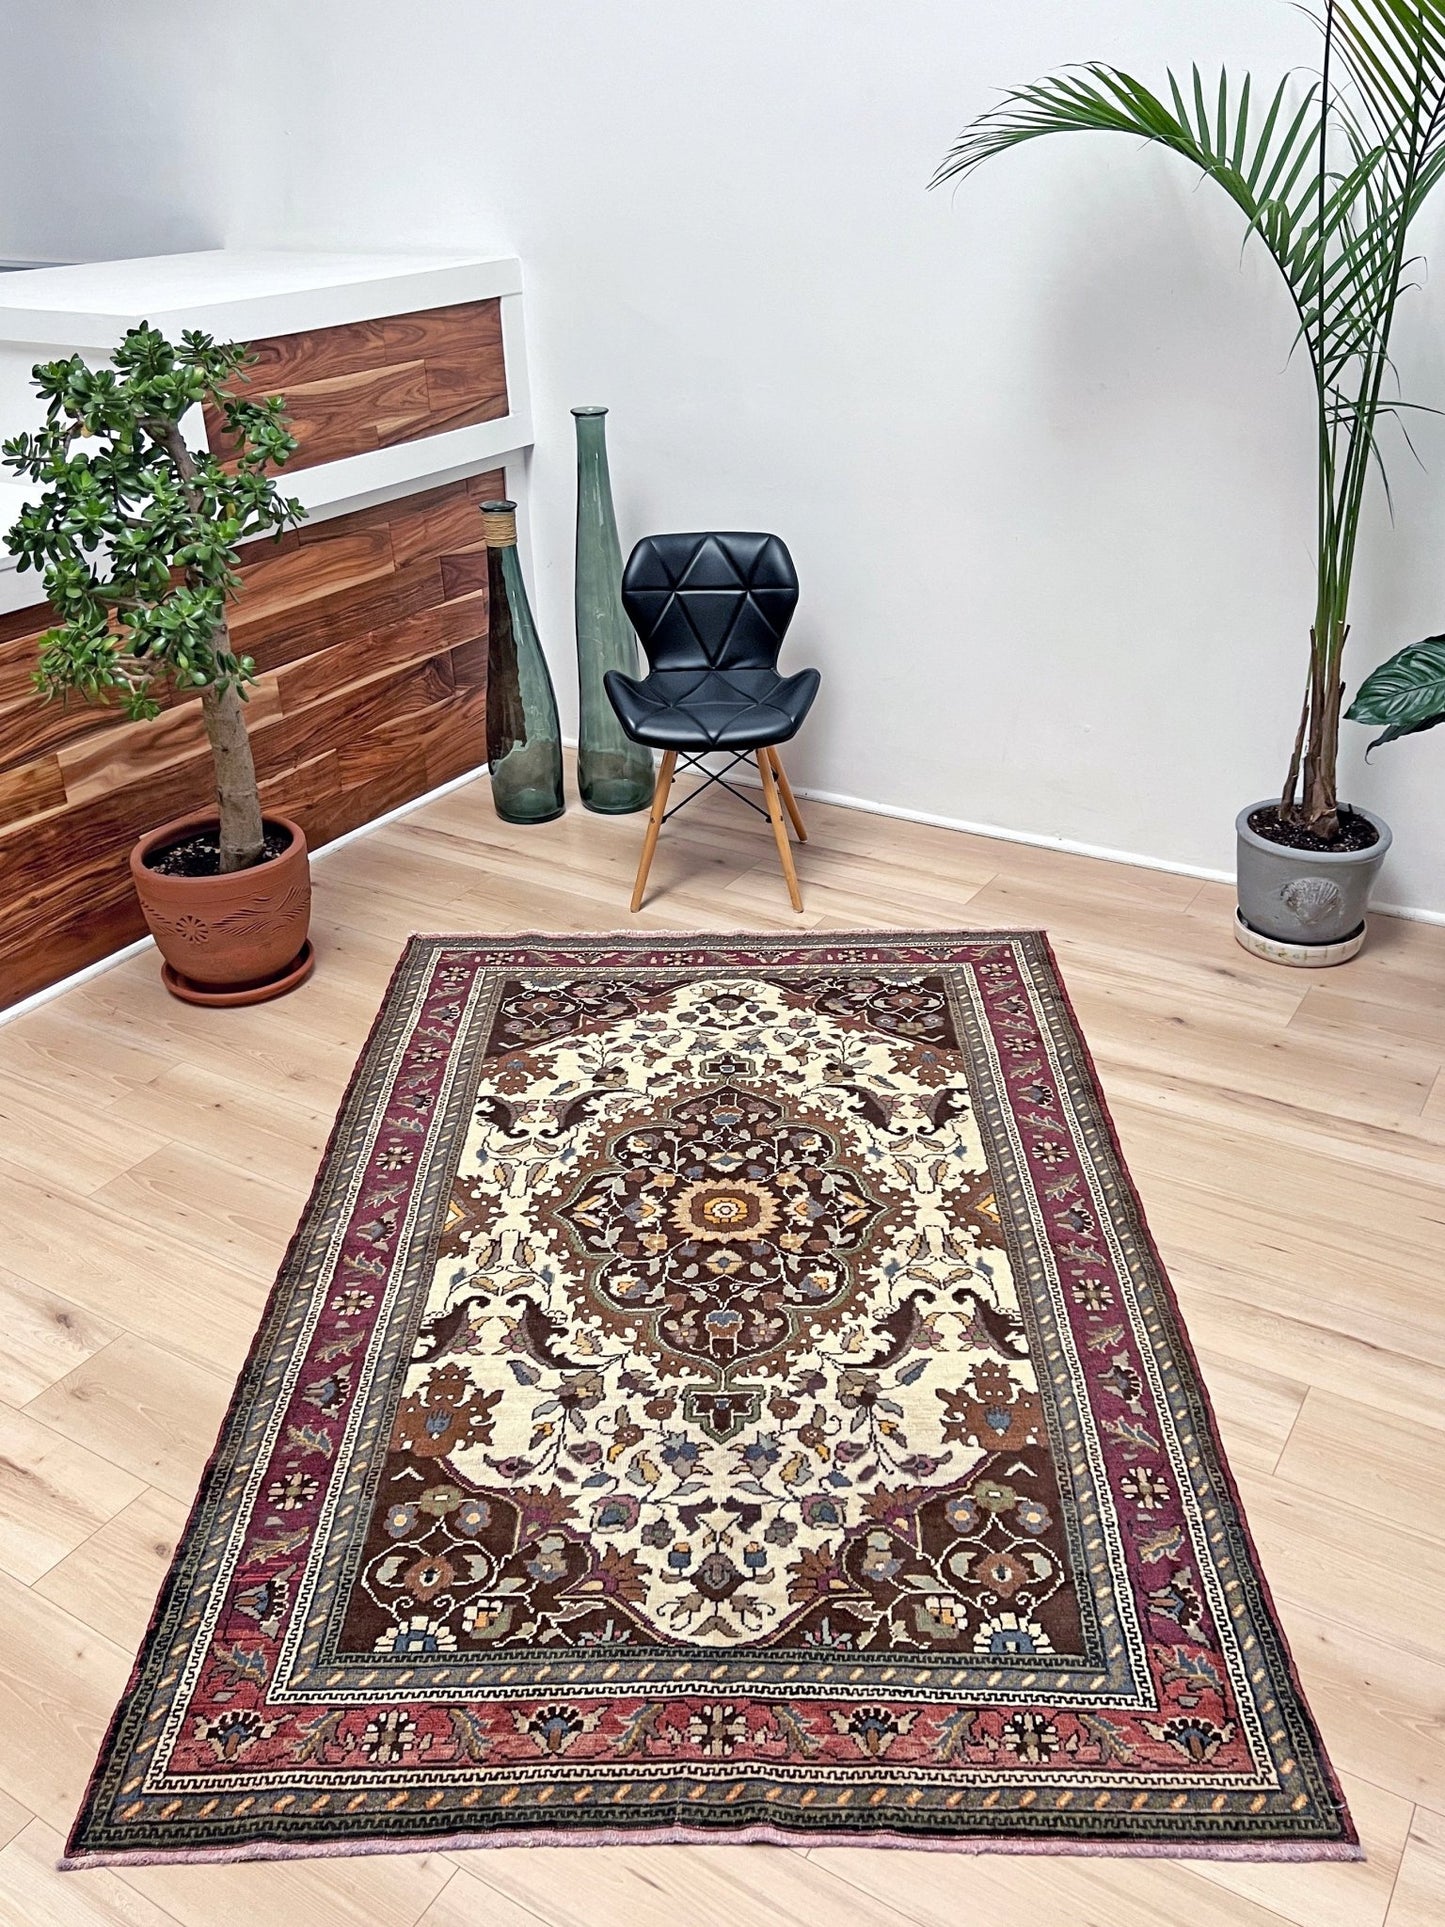 Kayseri Vintage turkish rug shop San francisco bay area. Carpet store Buy handmade 4x6 wool rug online free shipping.